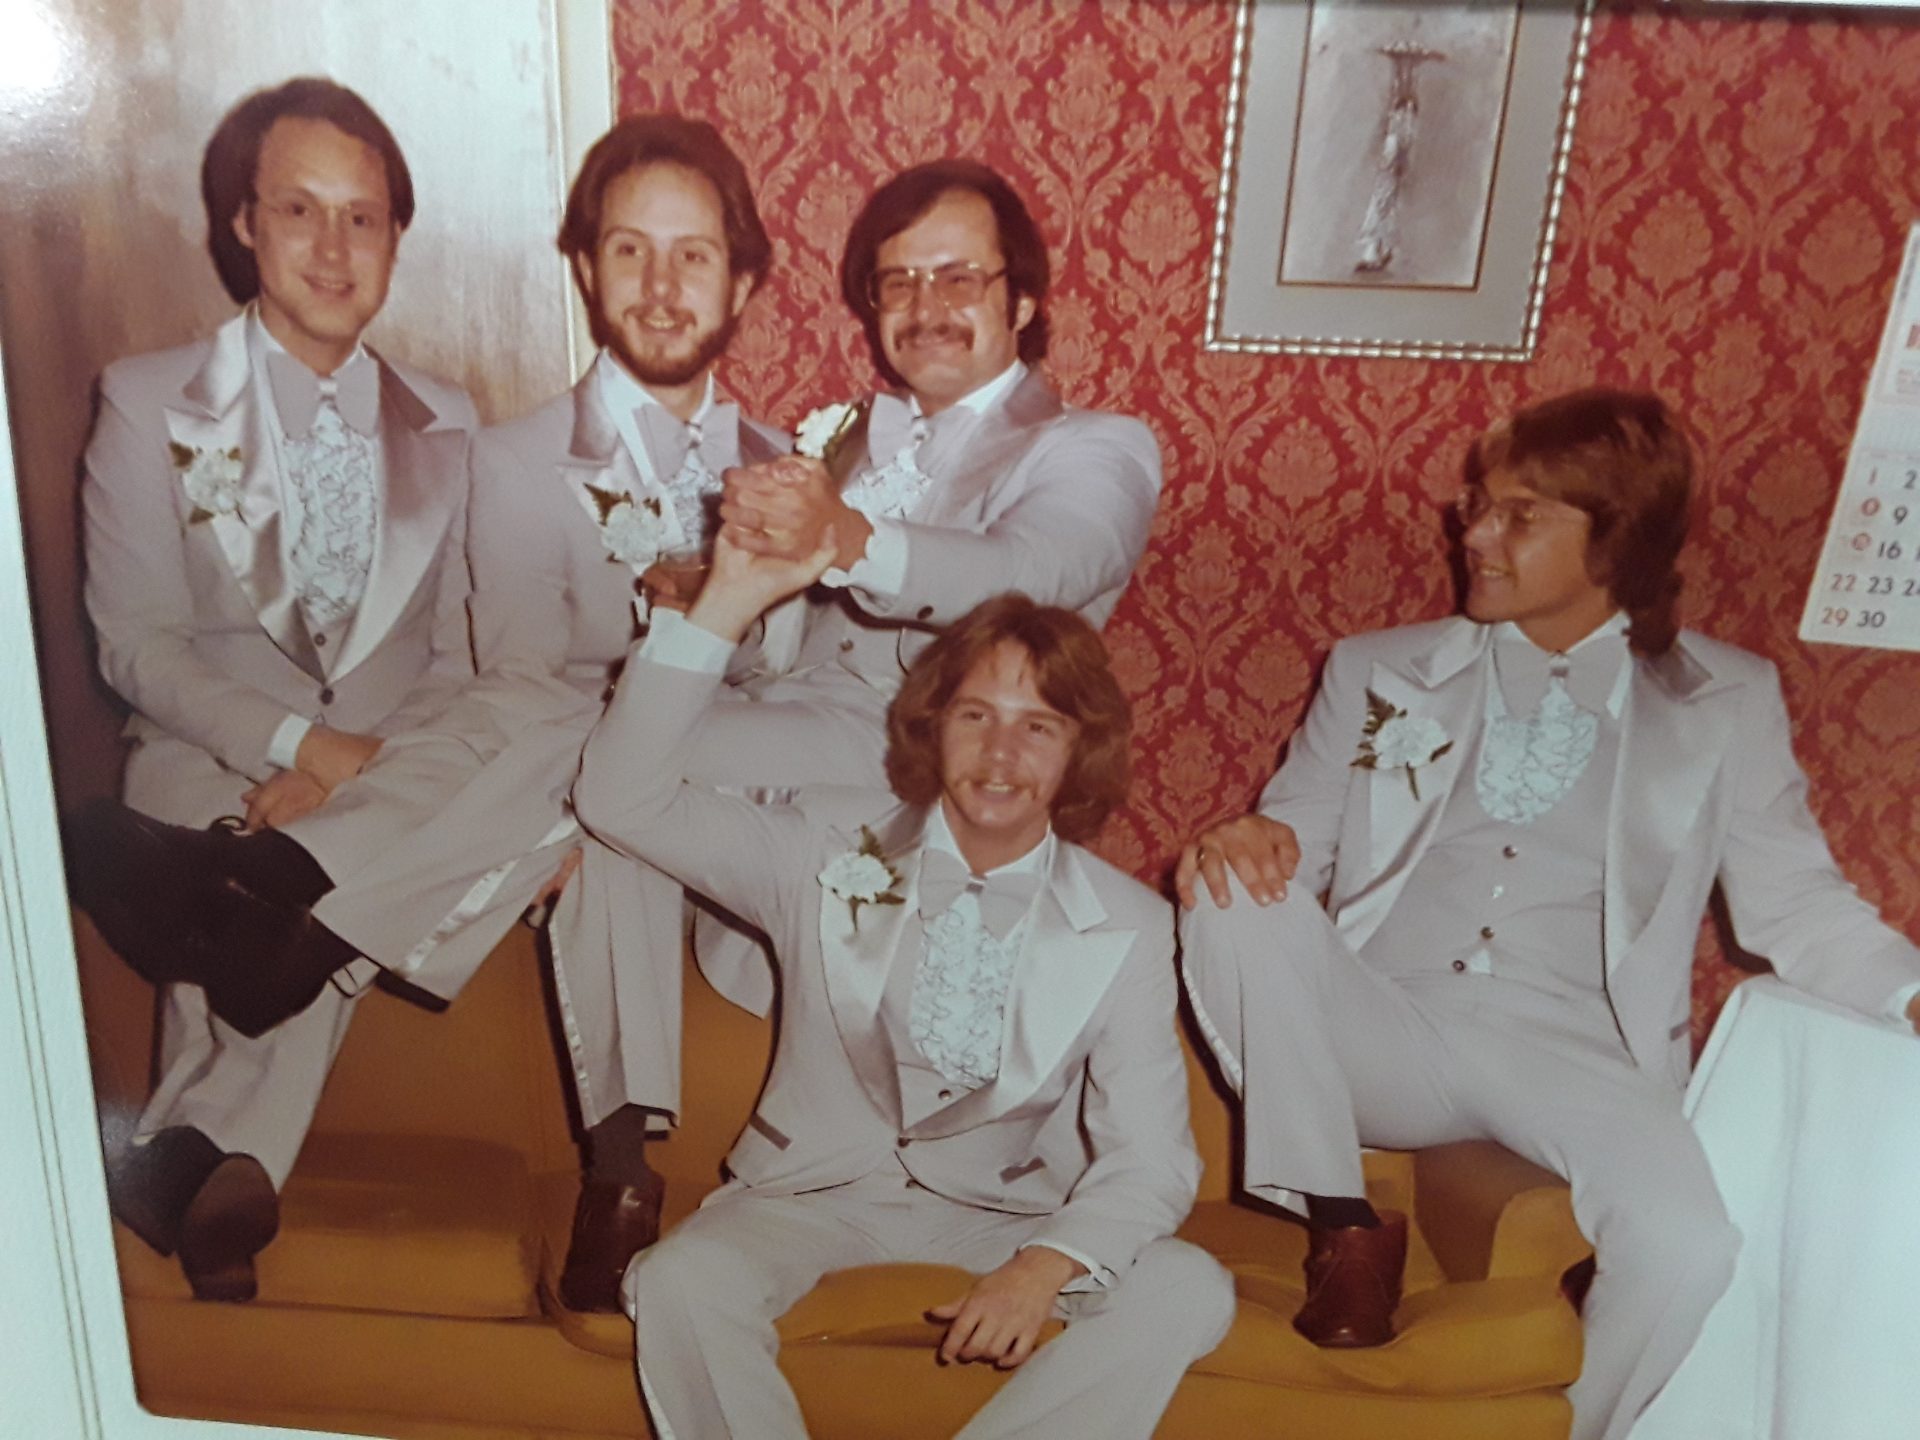 Wedding "Bro's" April 28 1979 Mark Bleeke,Carl Strandberg,Vic Dickinson,Bob Rial,and Pete Musslewhite